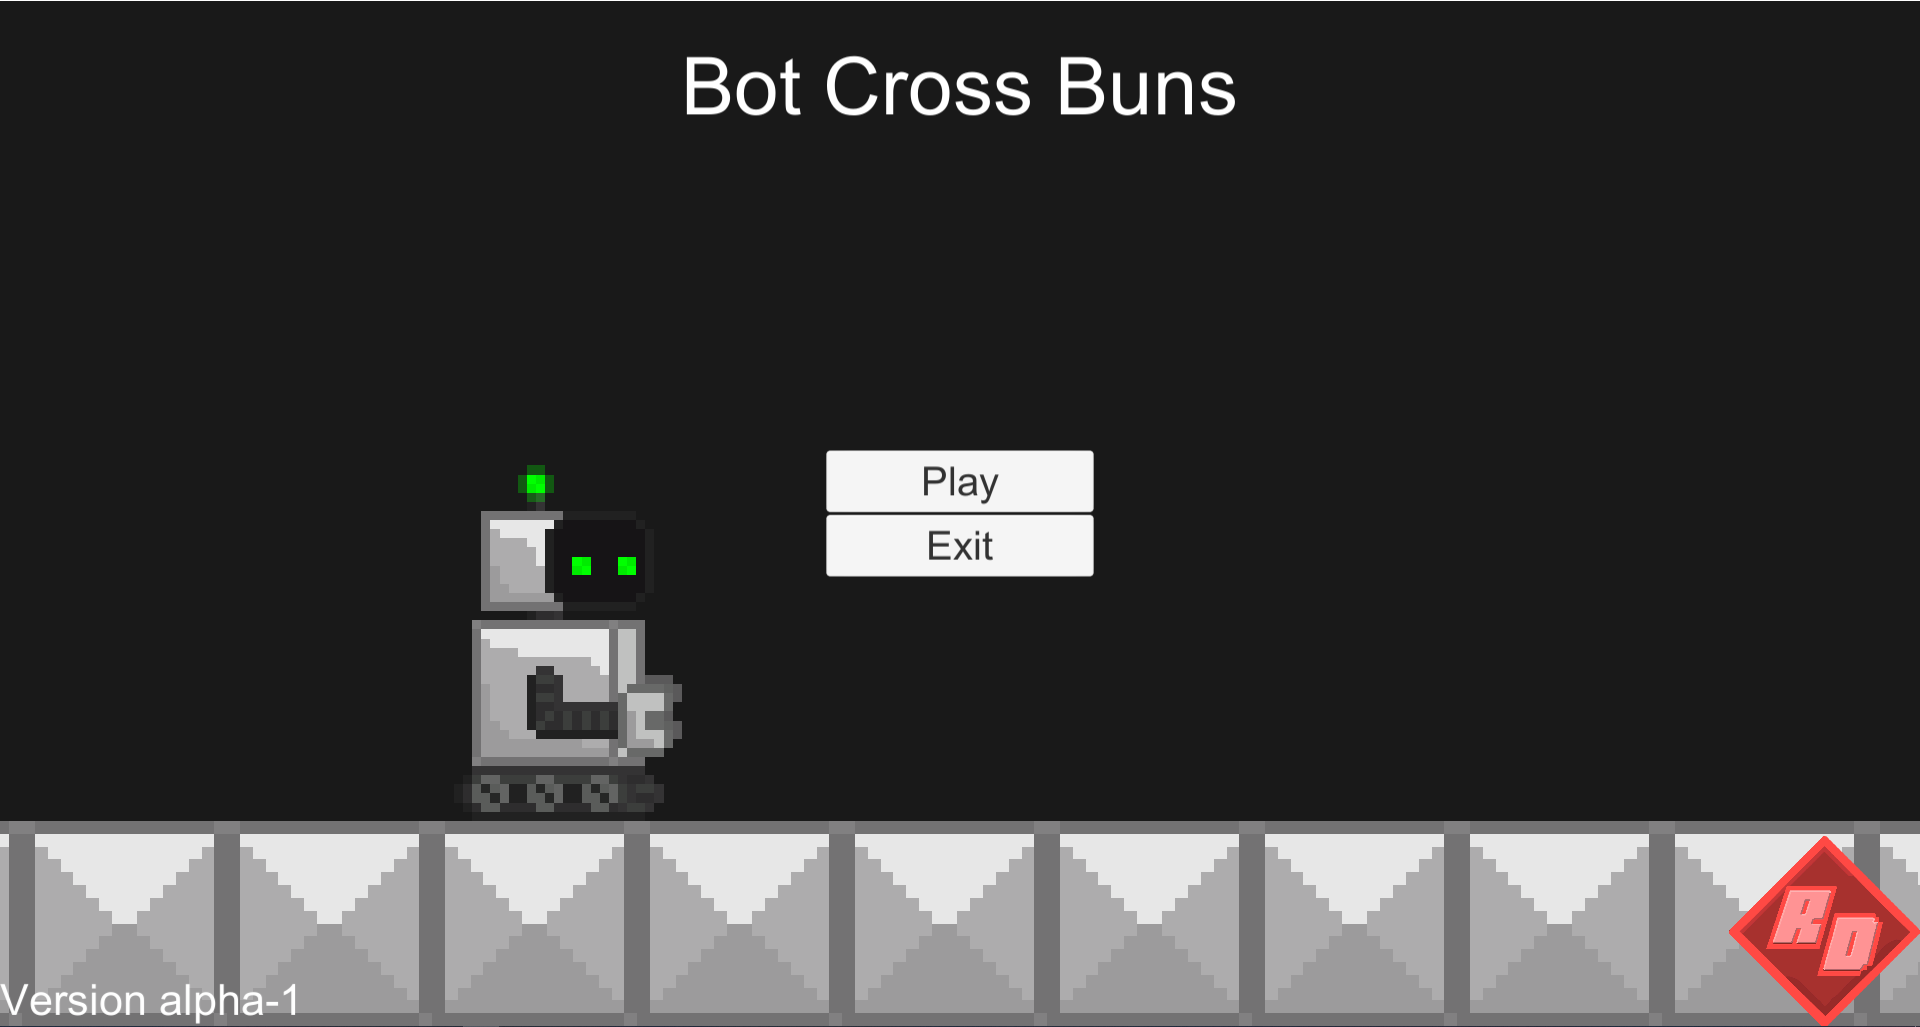 Bot Cross Buns